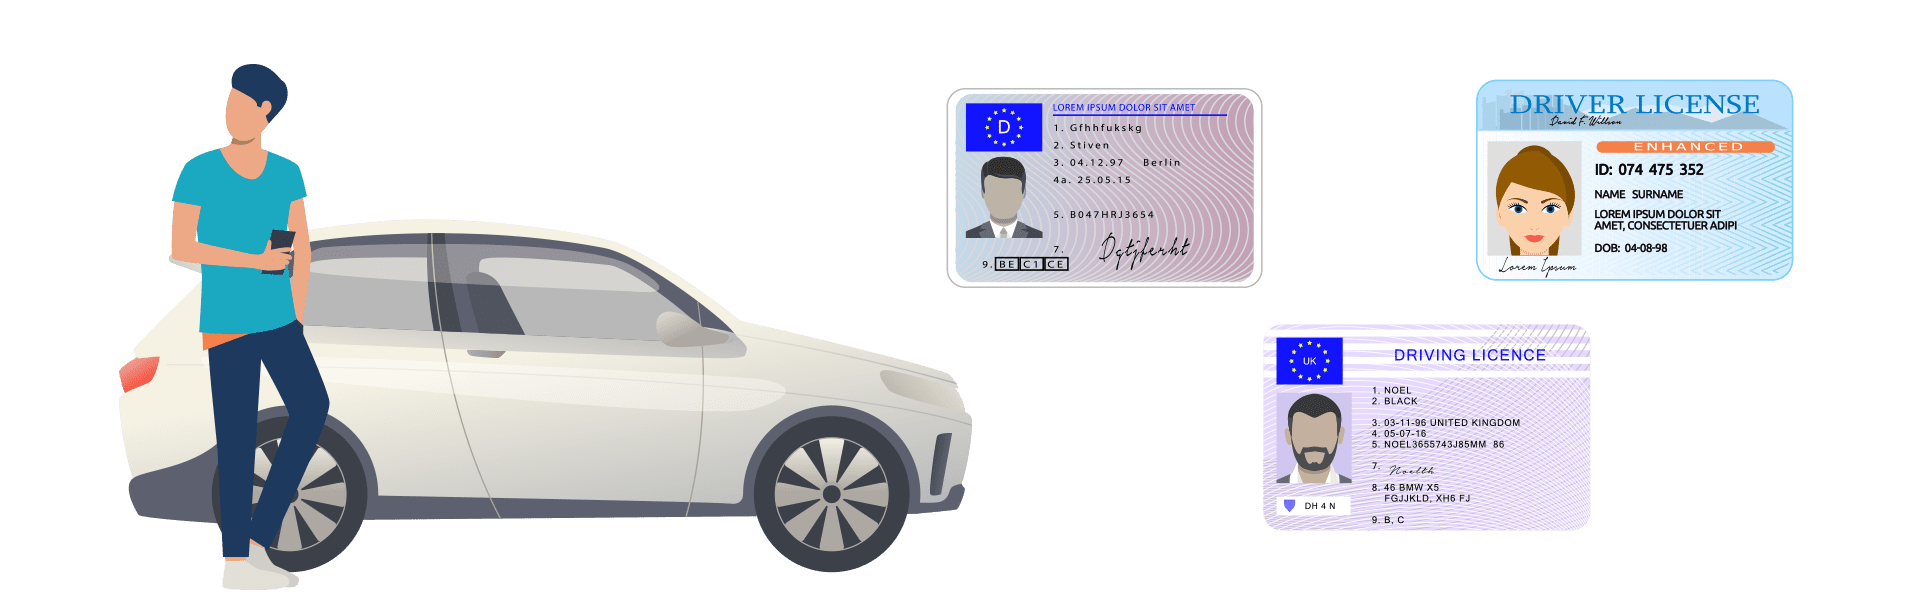 Driver license translation DMV requirements (full list)